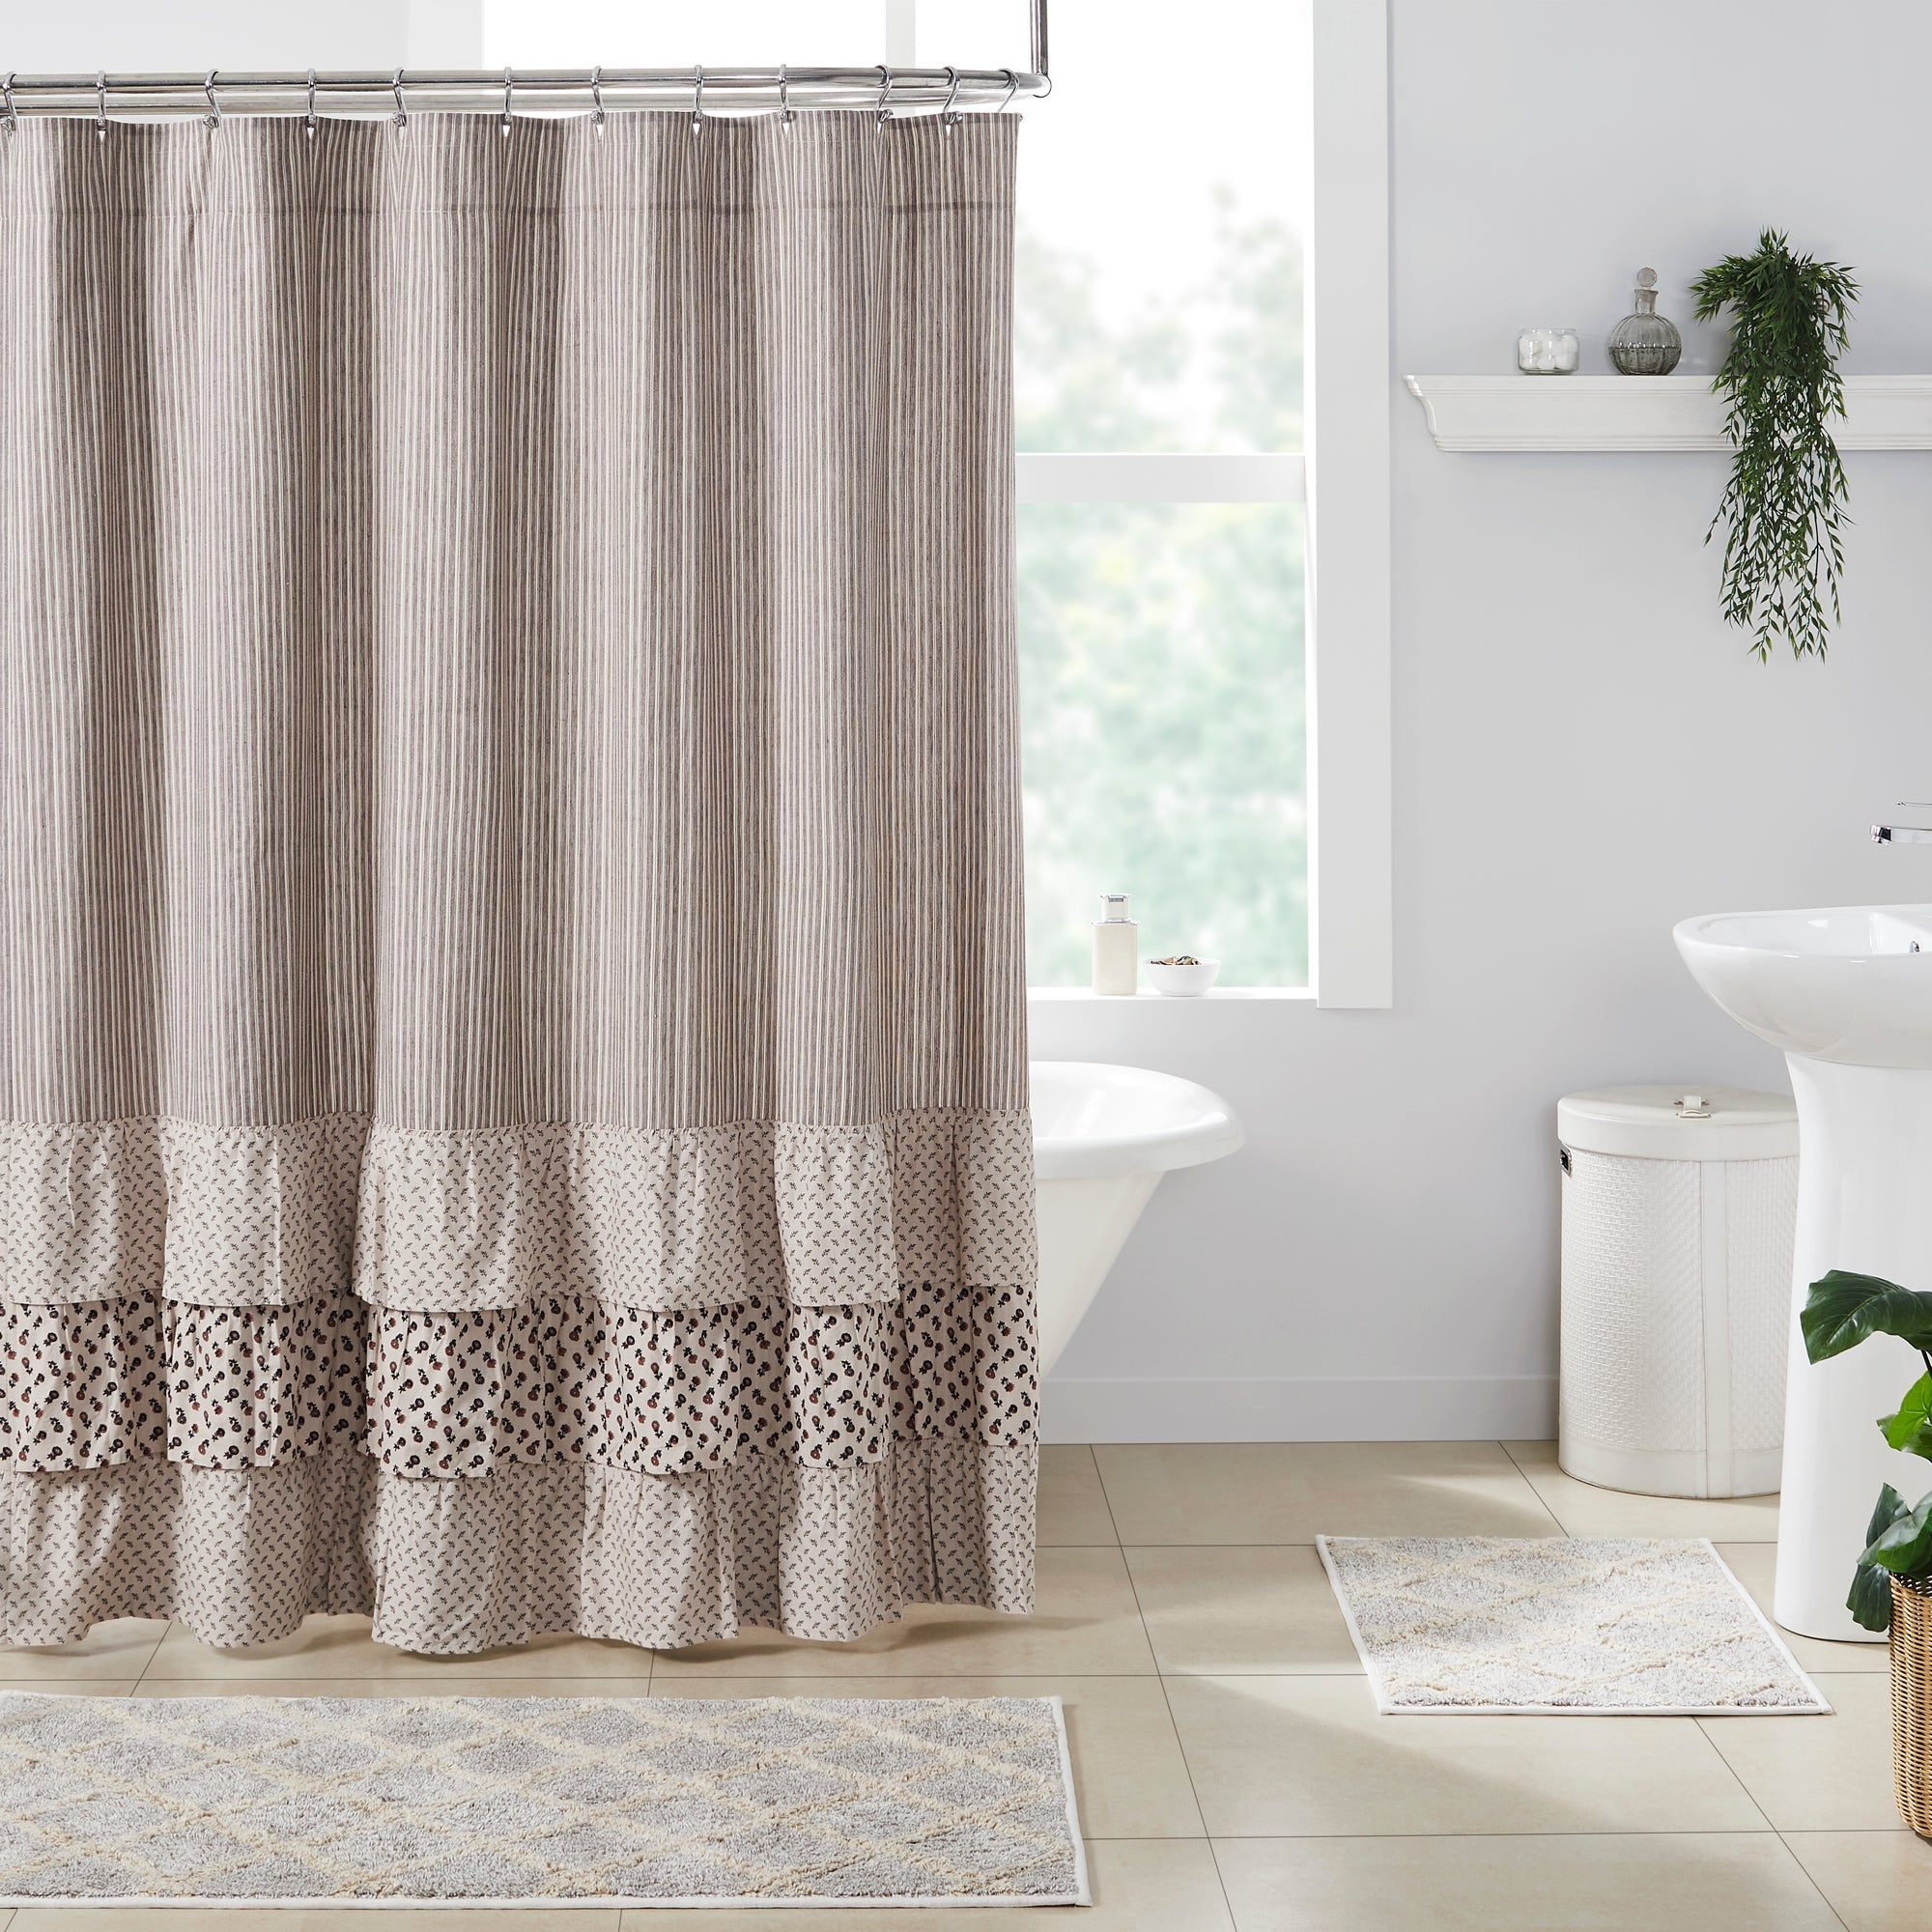 Florette Ruffled Shower Curtain 72x72 VHC Brands